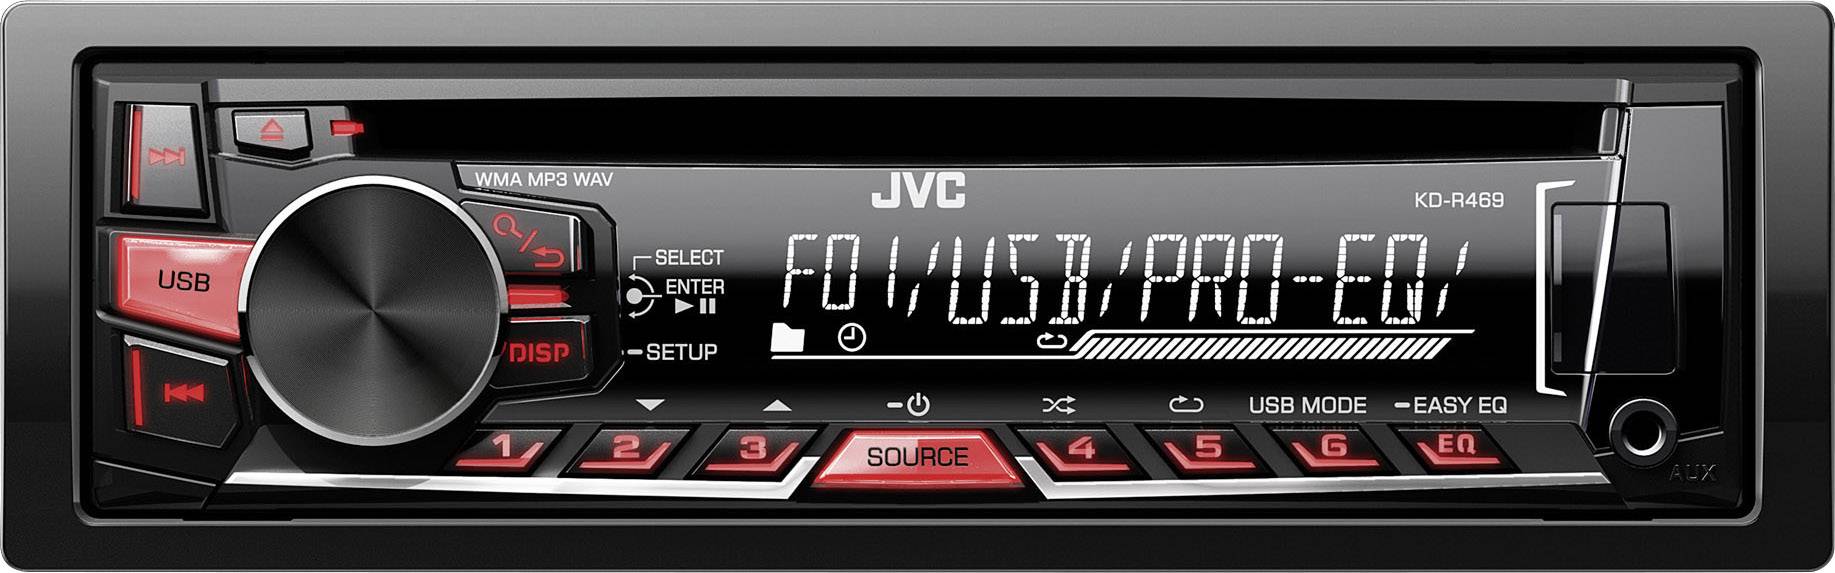 JVC KD-R469E Car stereo Steering wheel button connector | Conrad.com